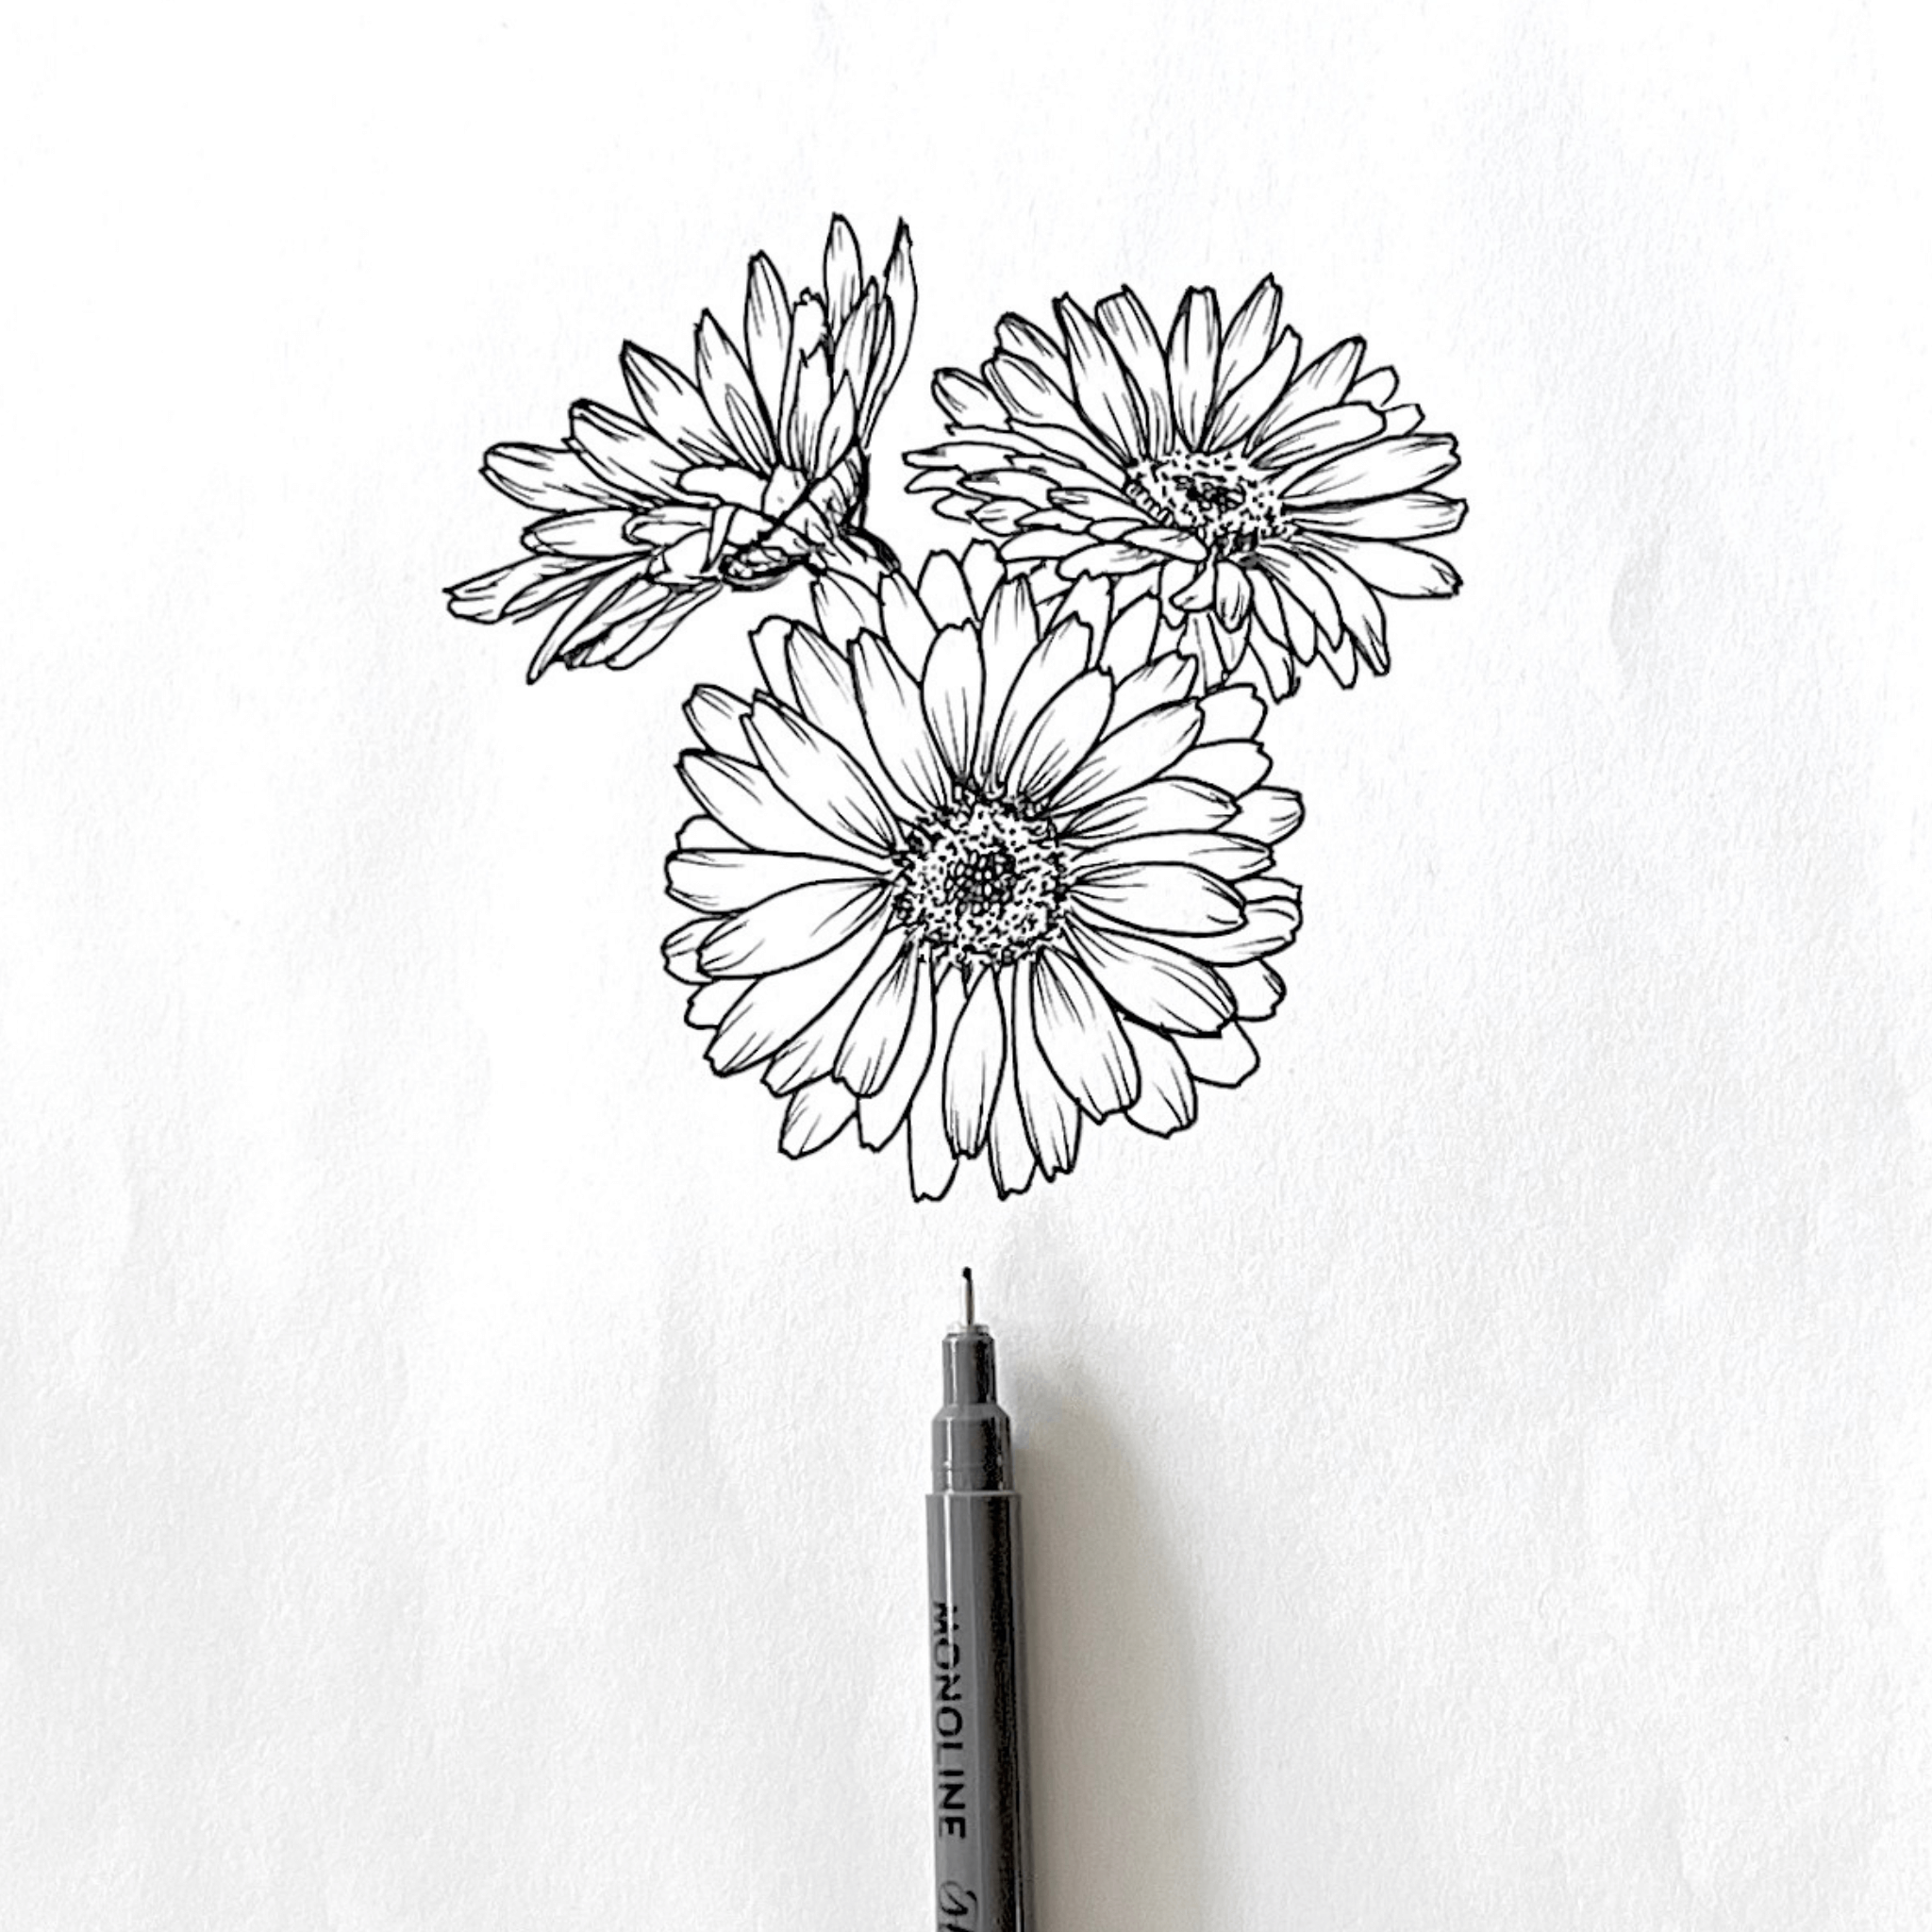 Sunflower line art drawing